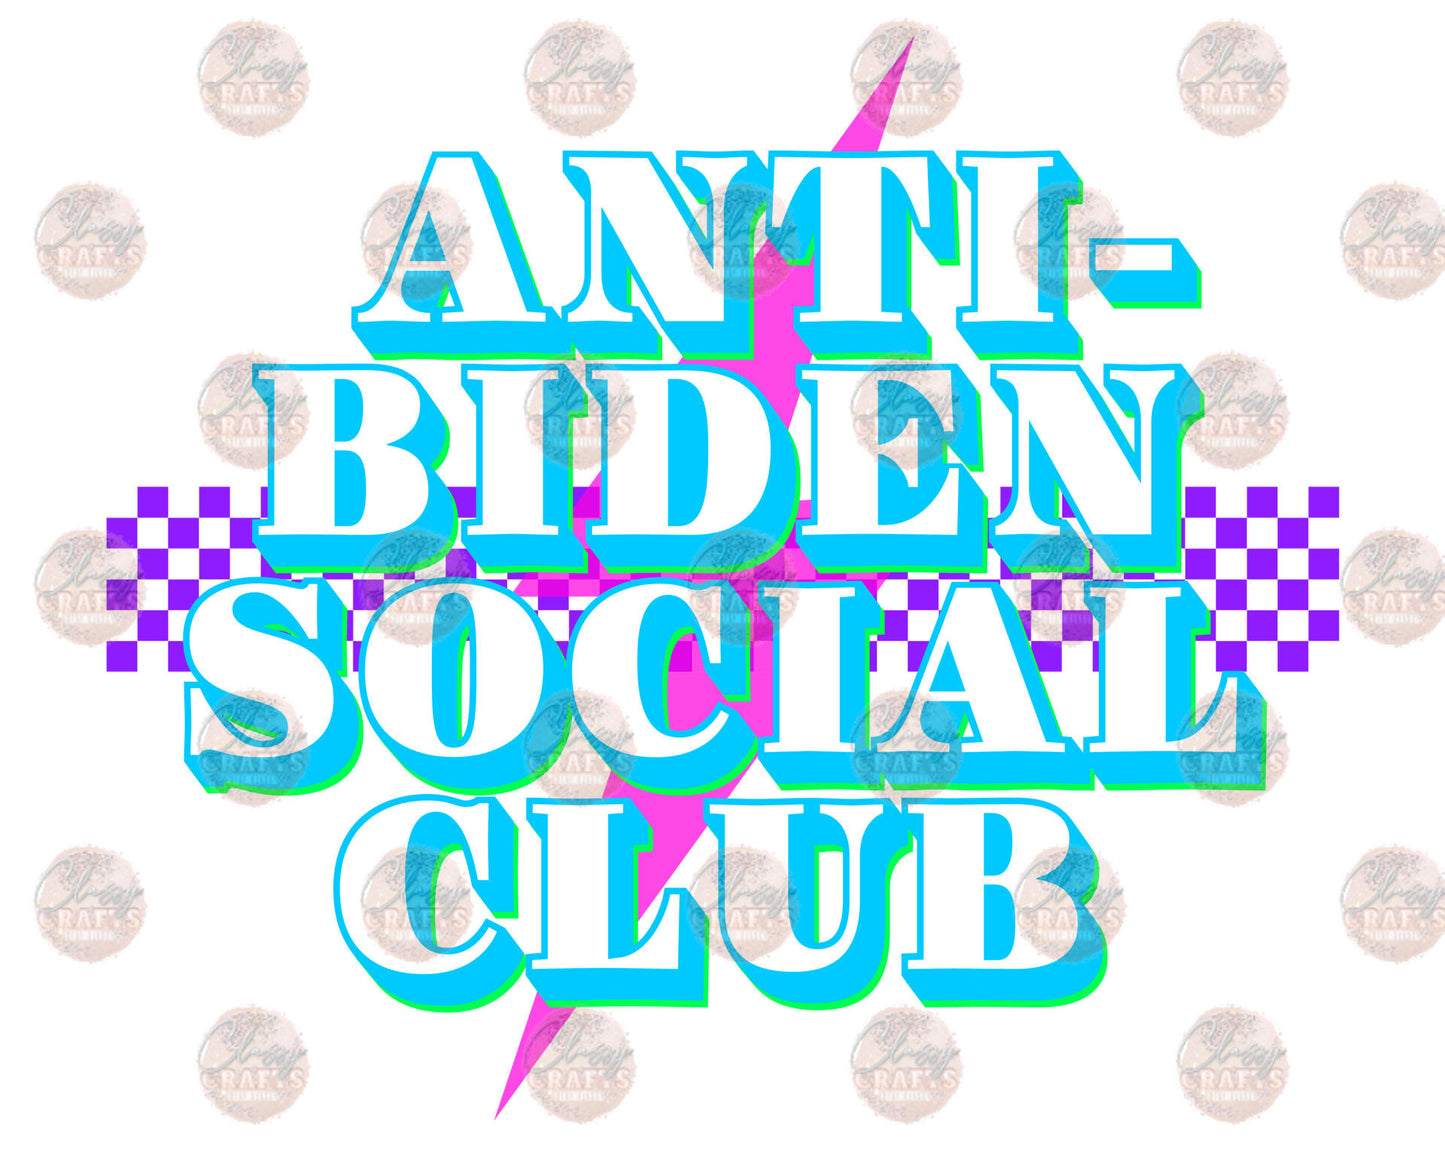 Anti-Biden Social Club - Sublimation Transfer